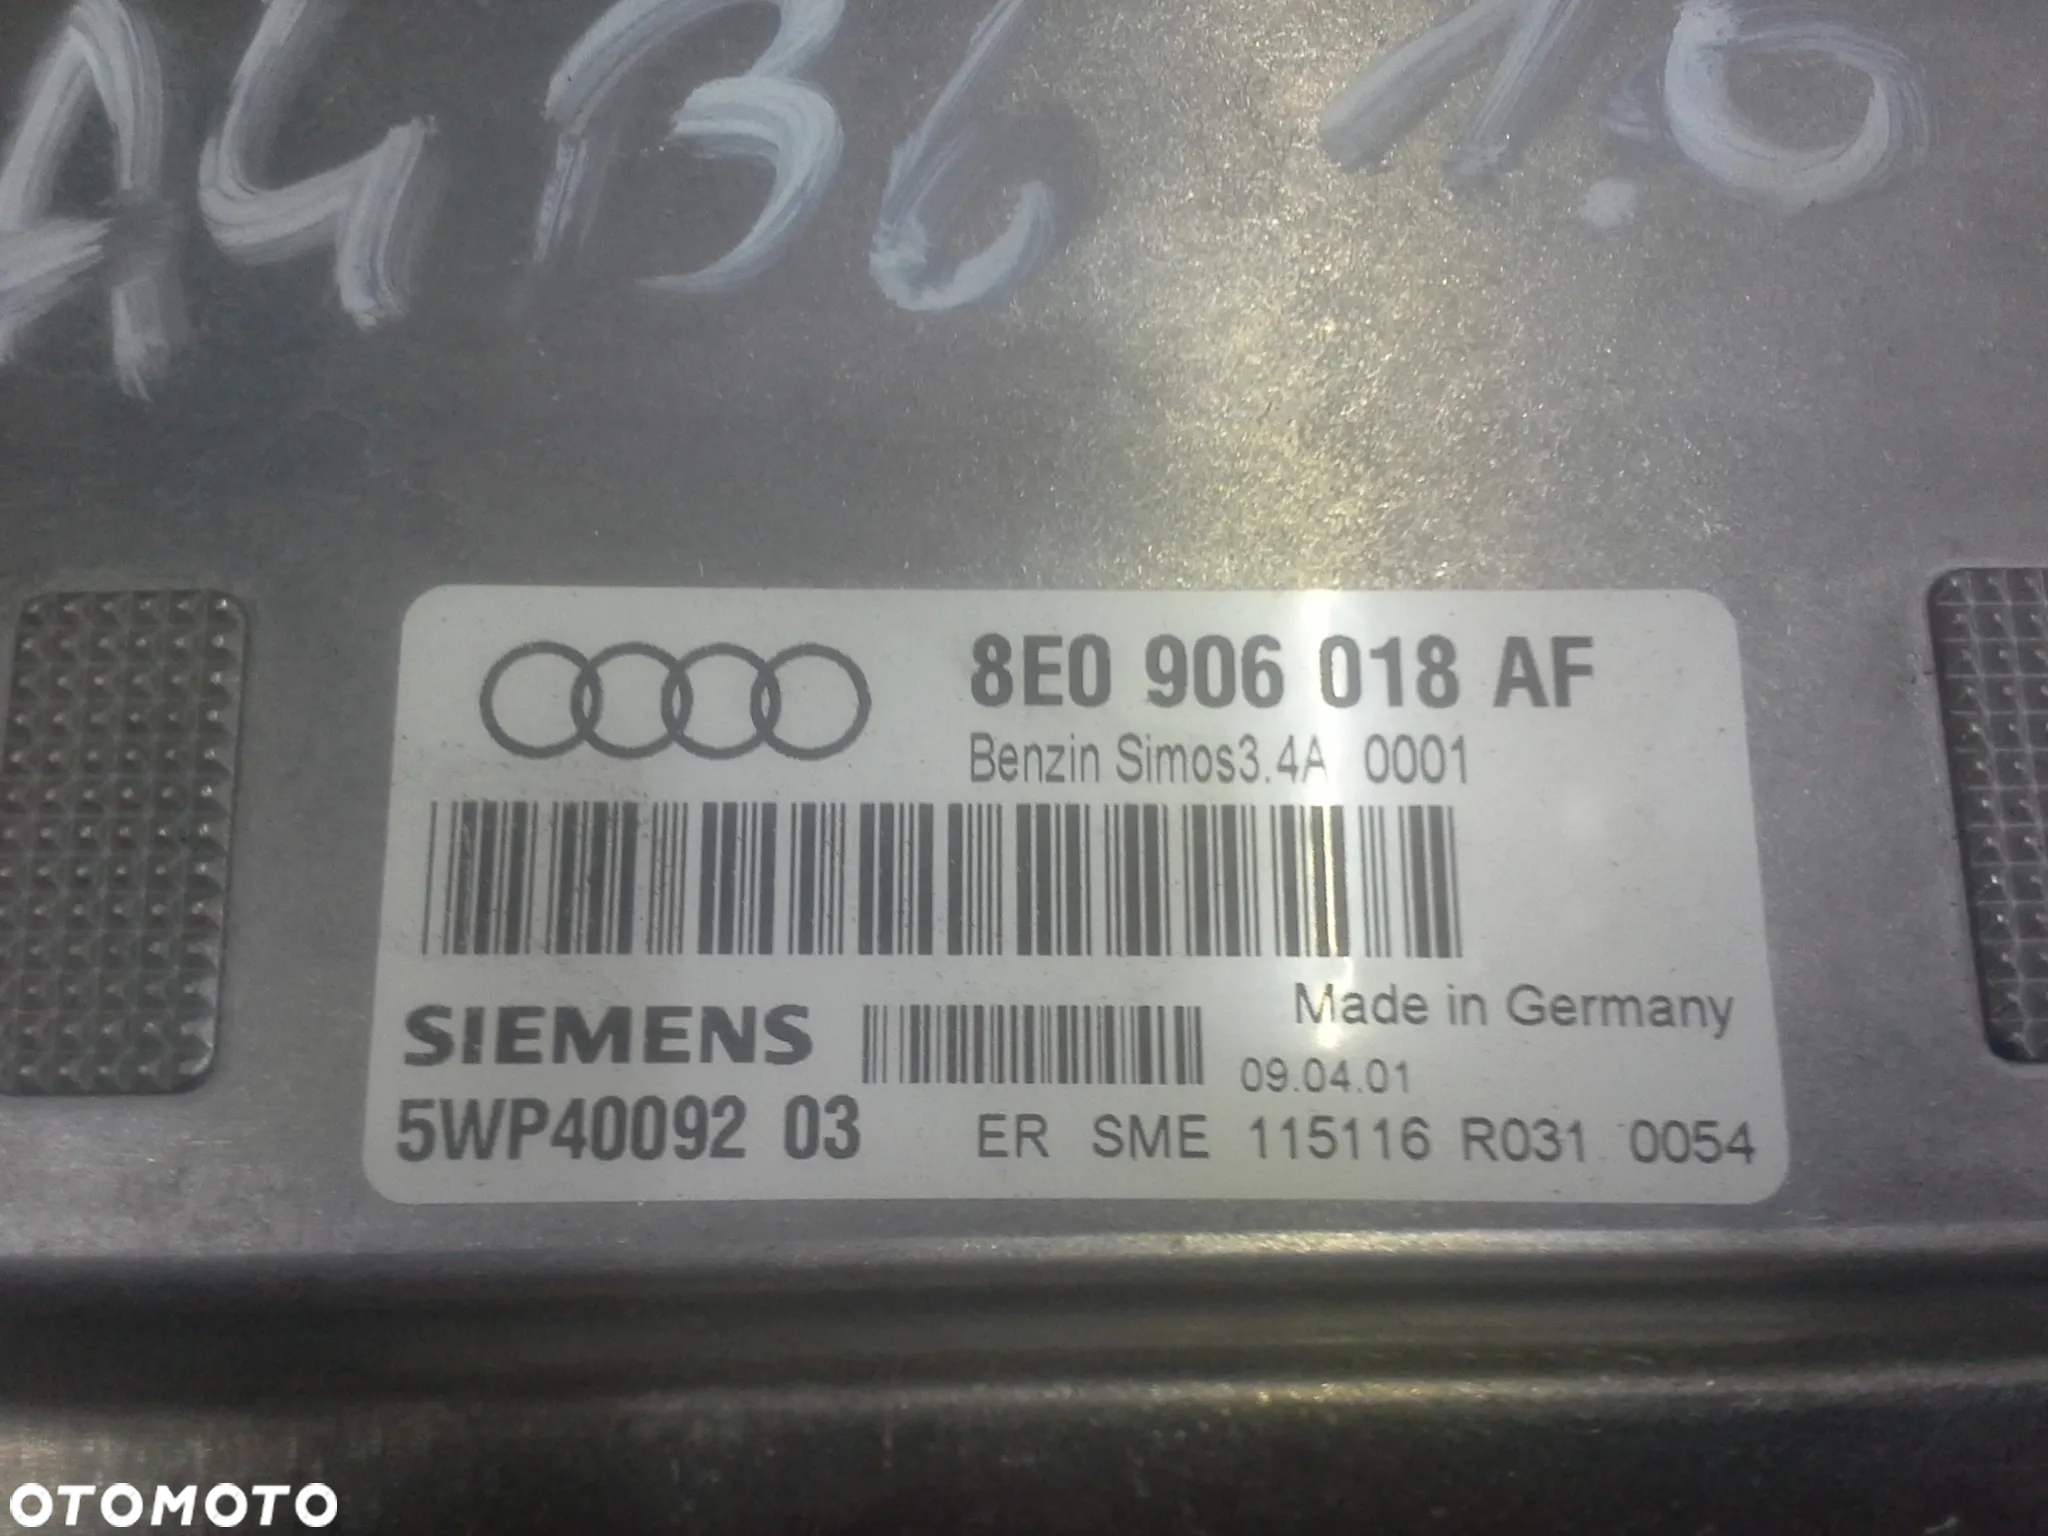 Audi A4 B6 B7 1.6 8V ALZ zestaw startowy stacyjka klucze komputer 8E0906018AF 5WP40092 03 - 9